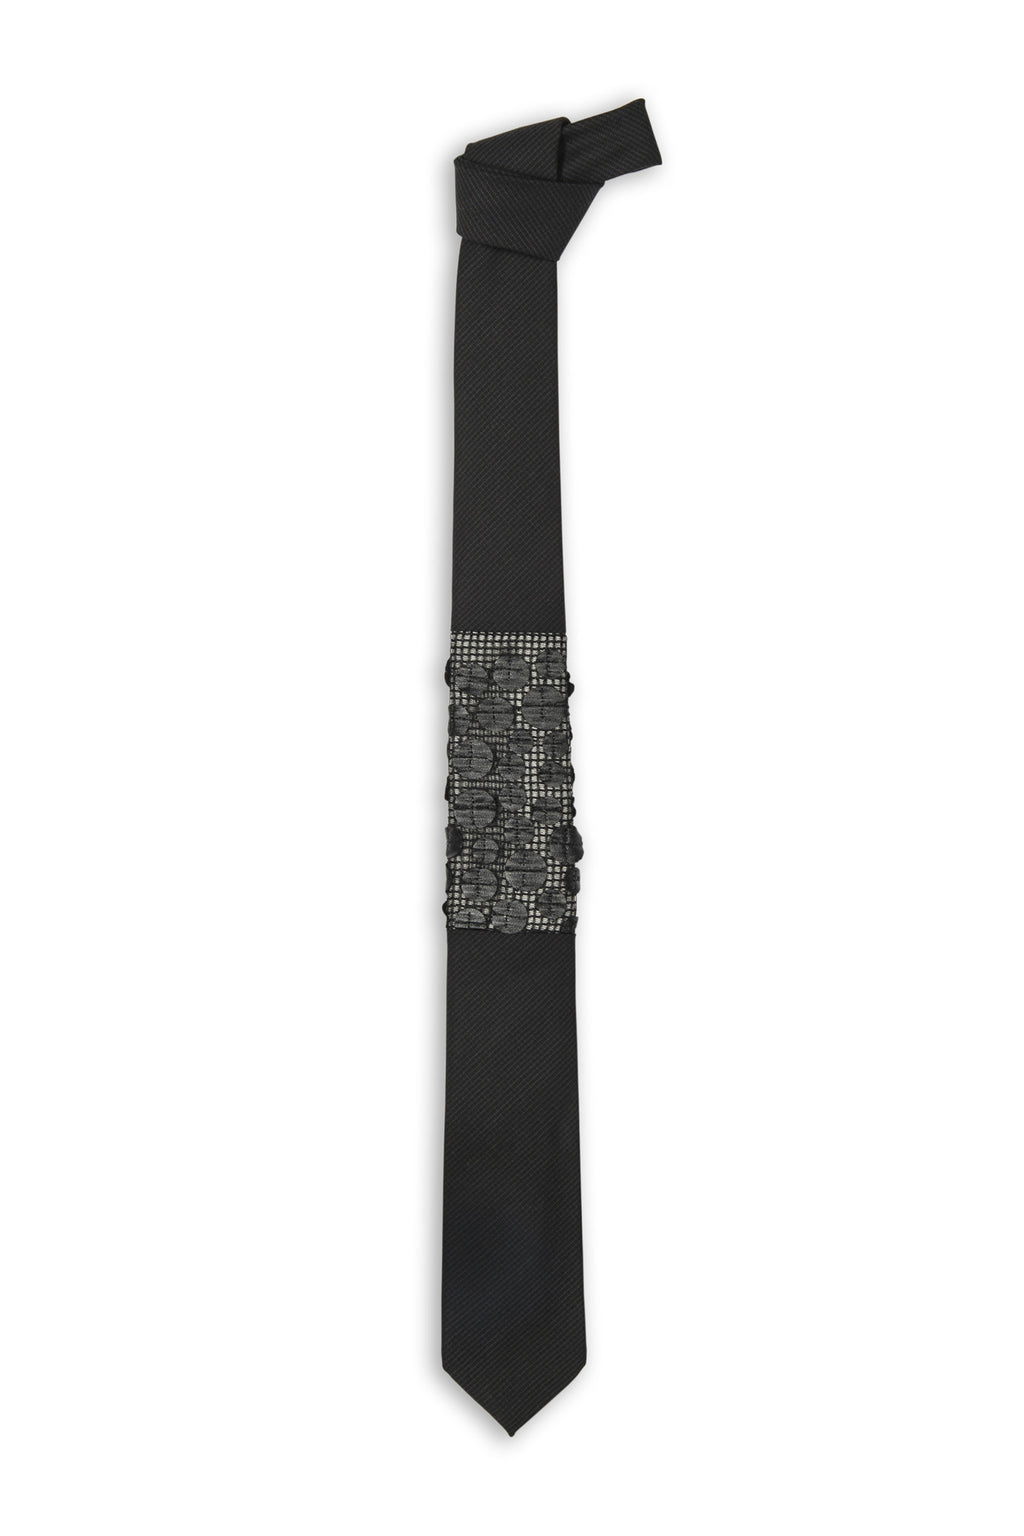 Cravate laine noire avec insertion tissu exotic avec rond - Black wool tie with exotic fabric insertion